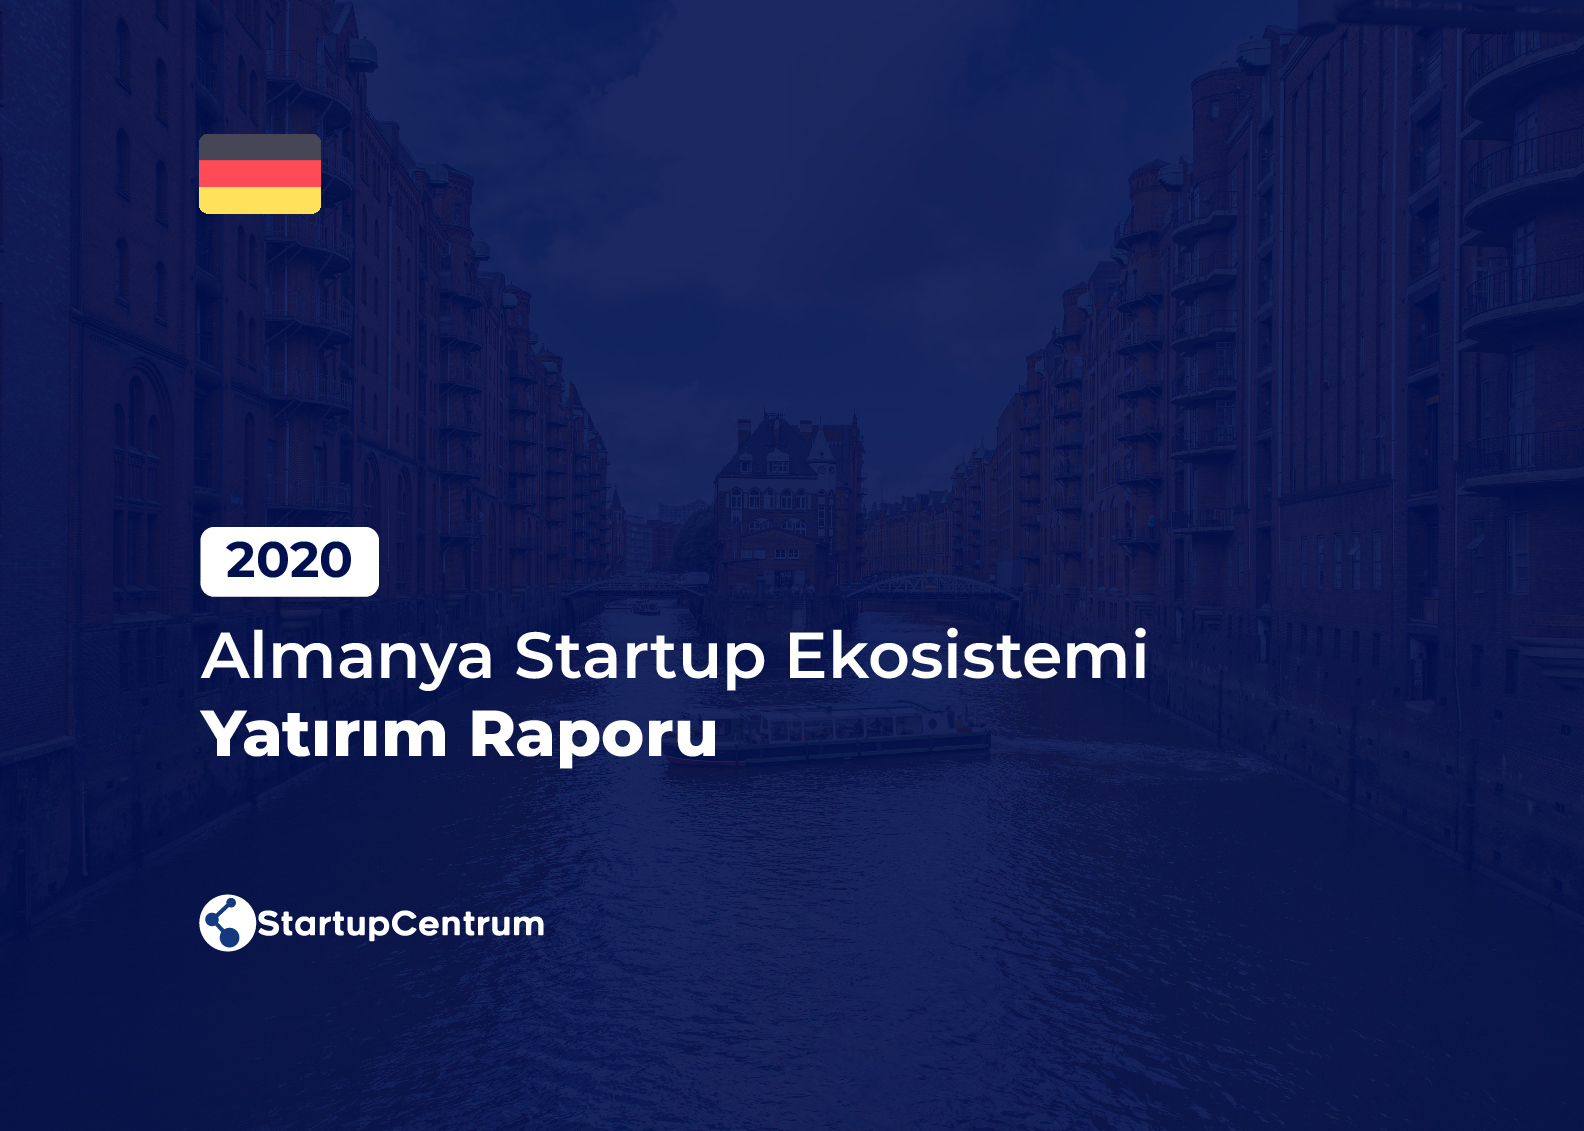 2020 - Almanya Startup Ekosistemi Yatırım Raporu Cover Image